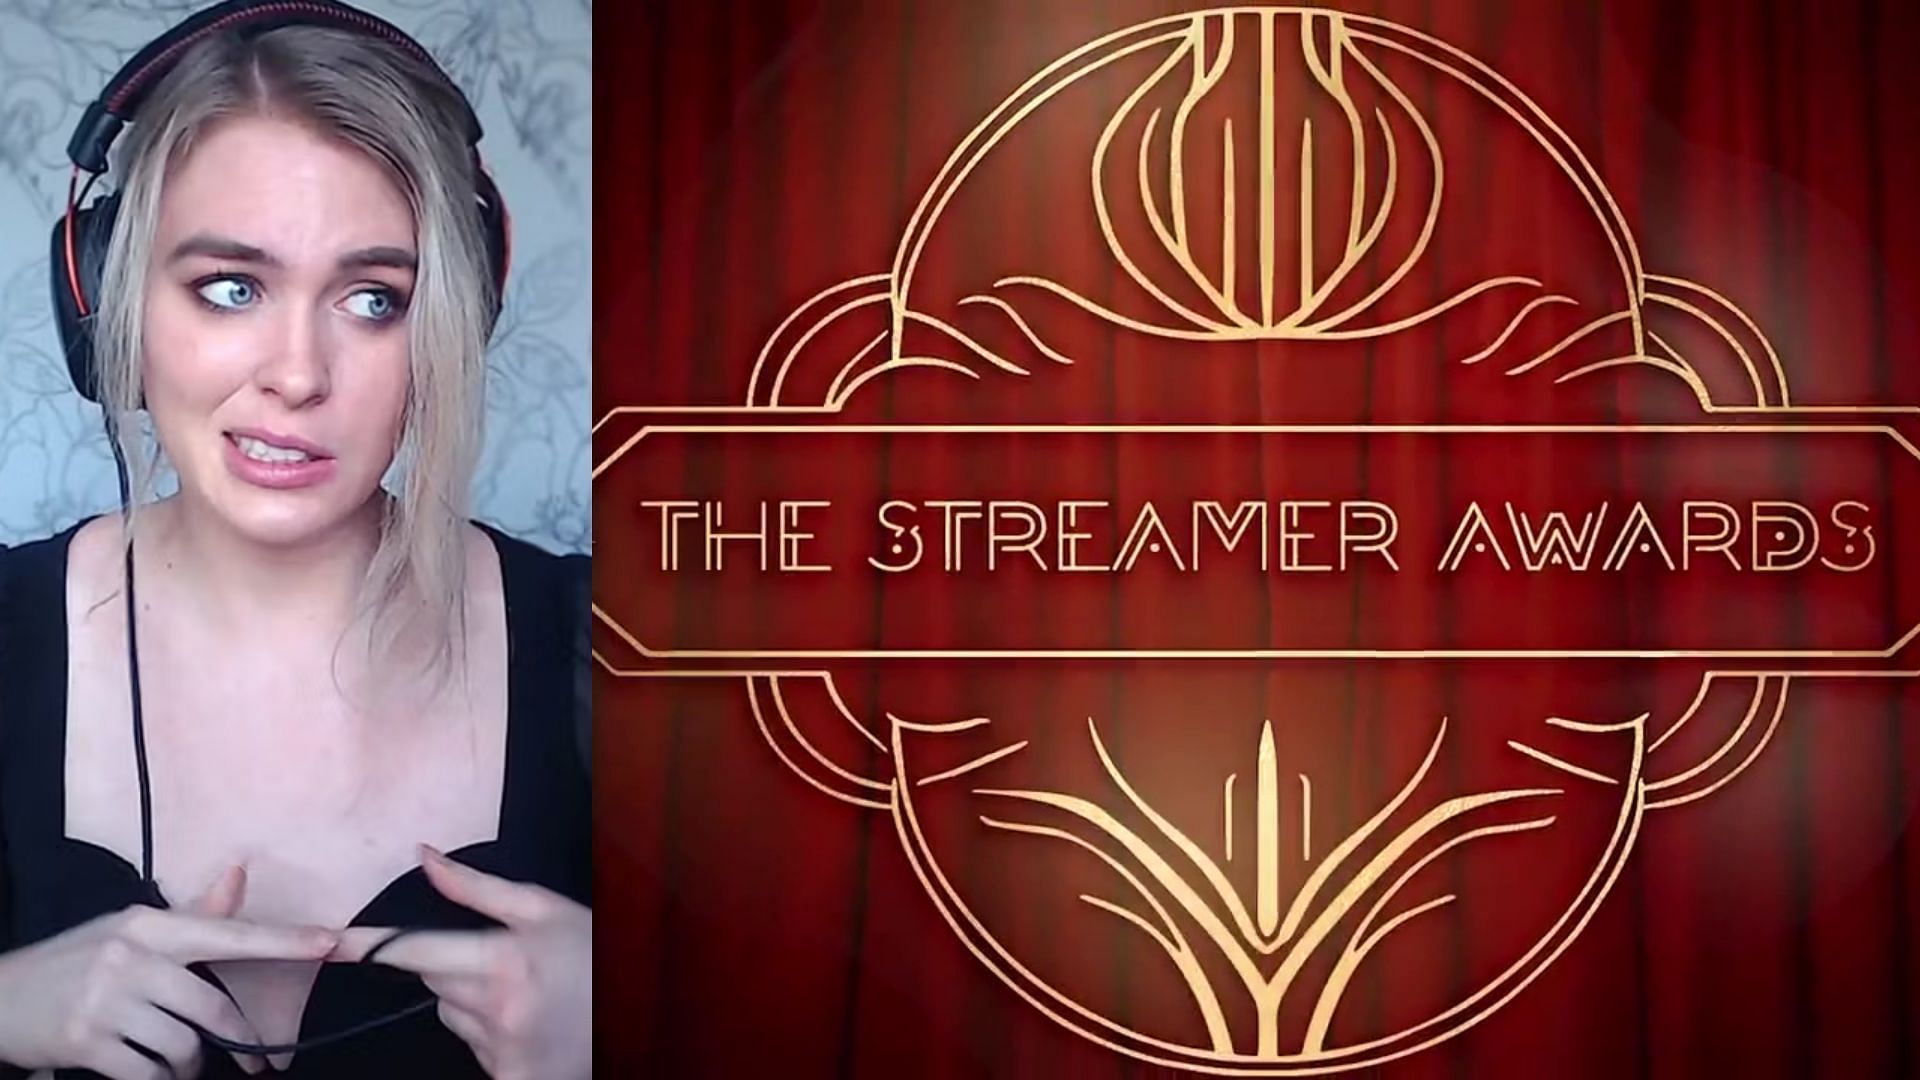 The Streamer Awards